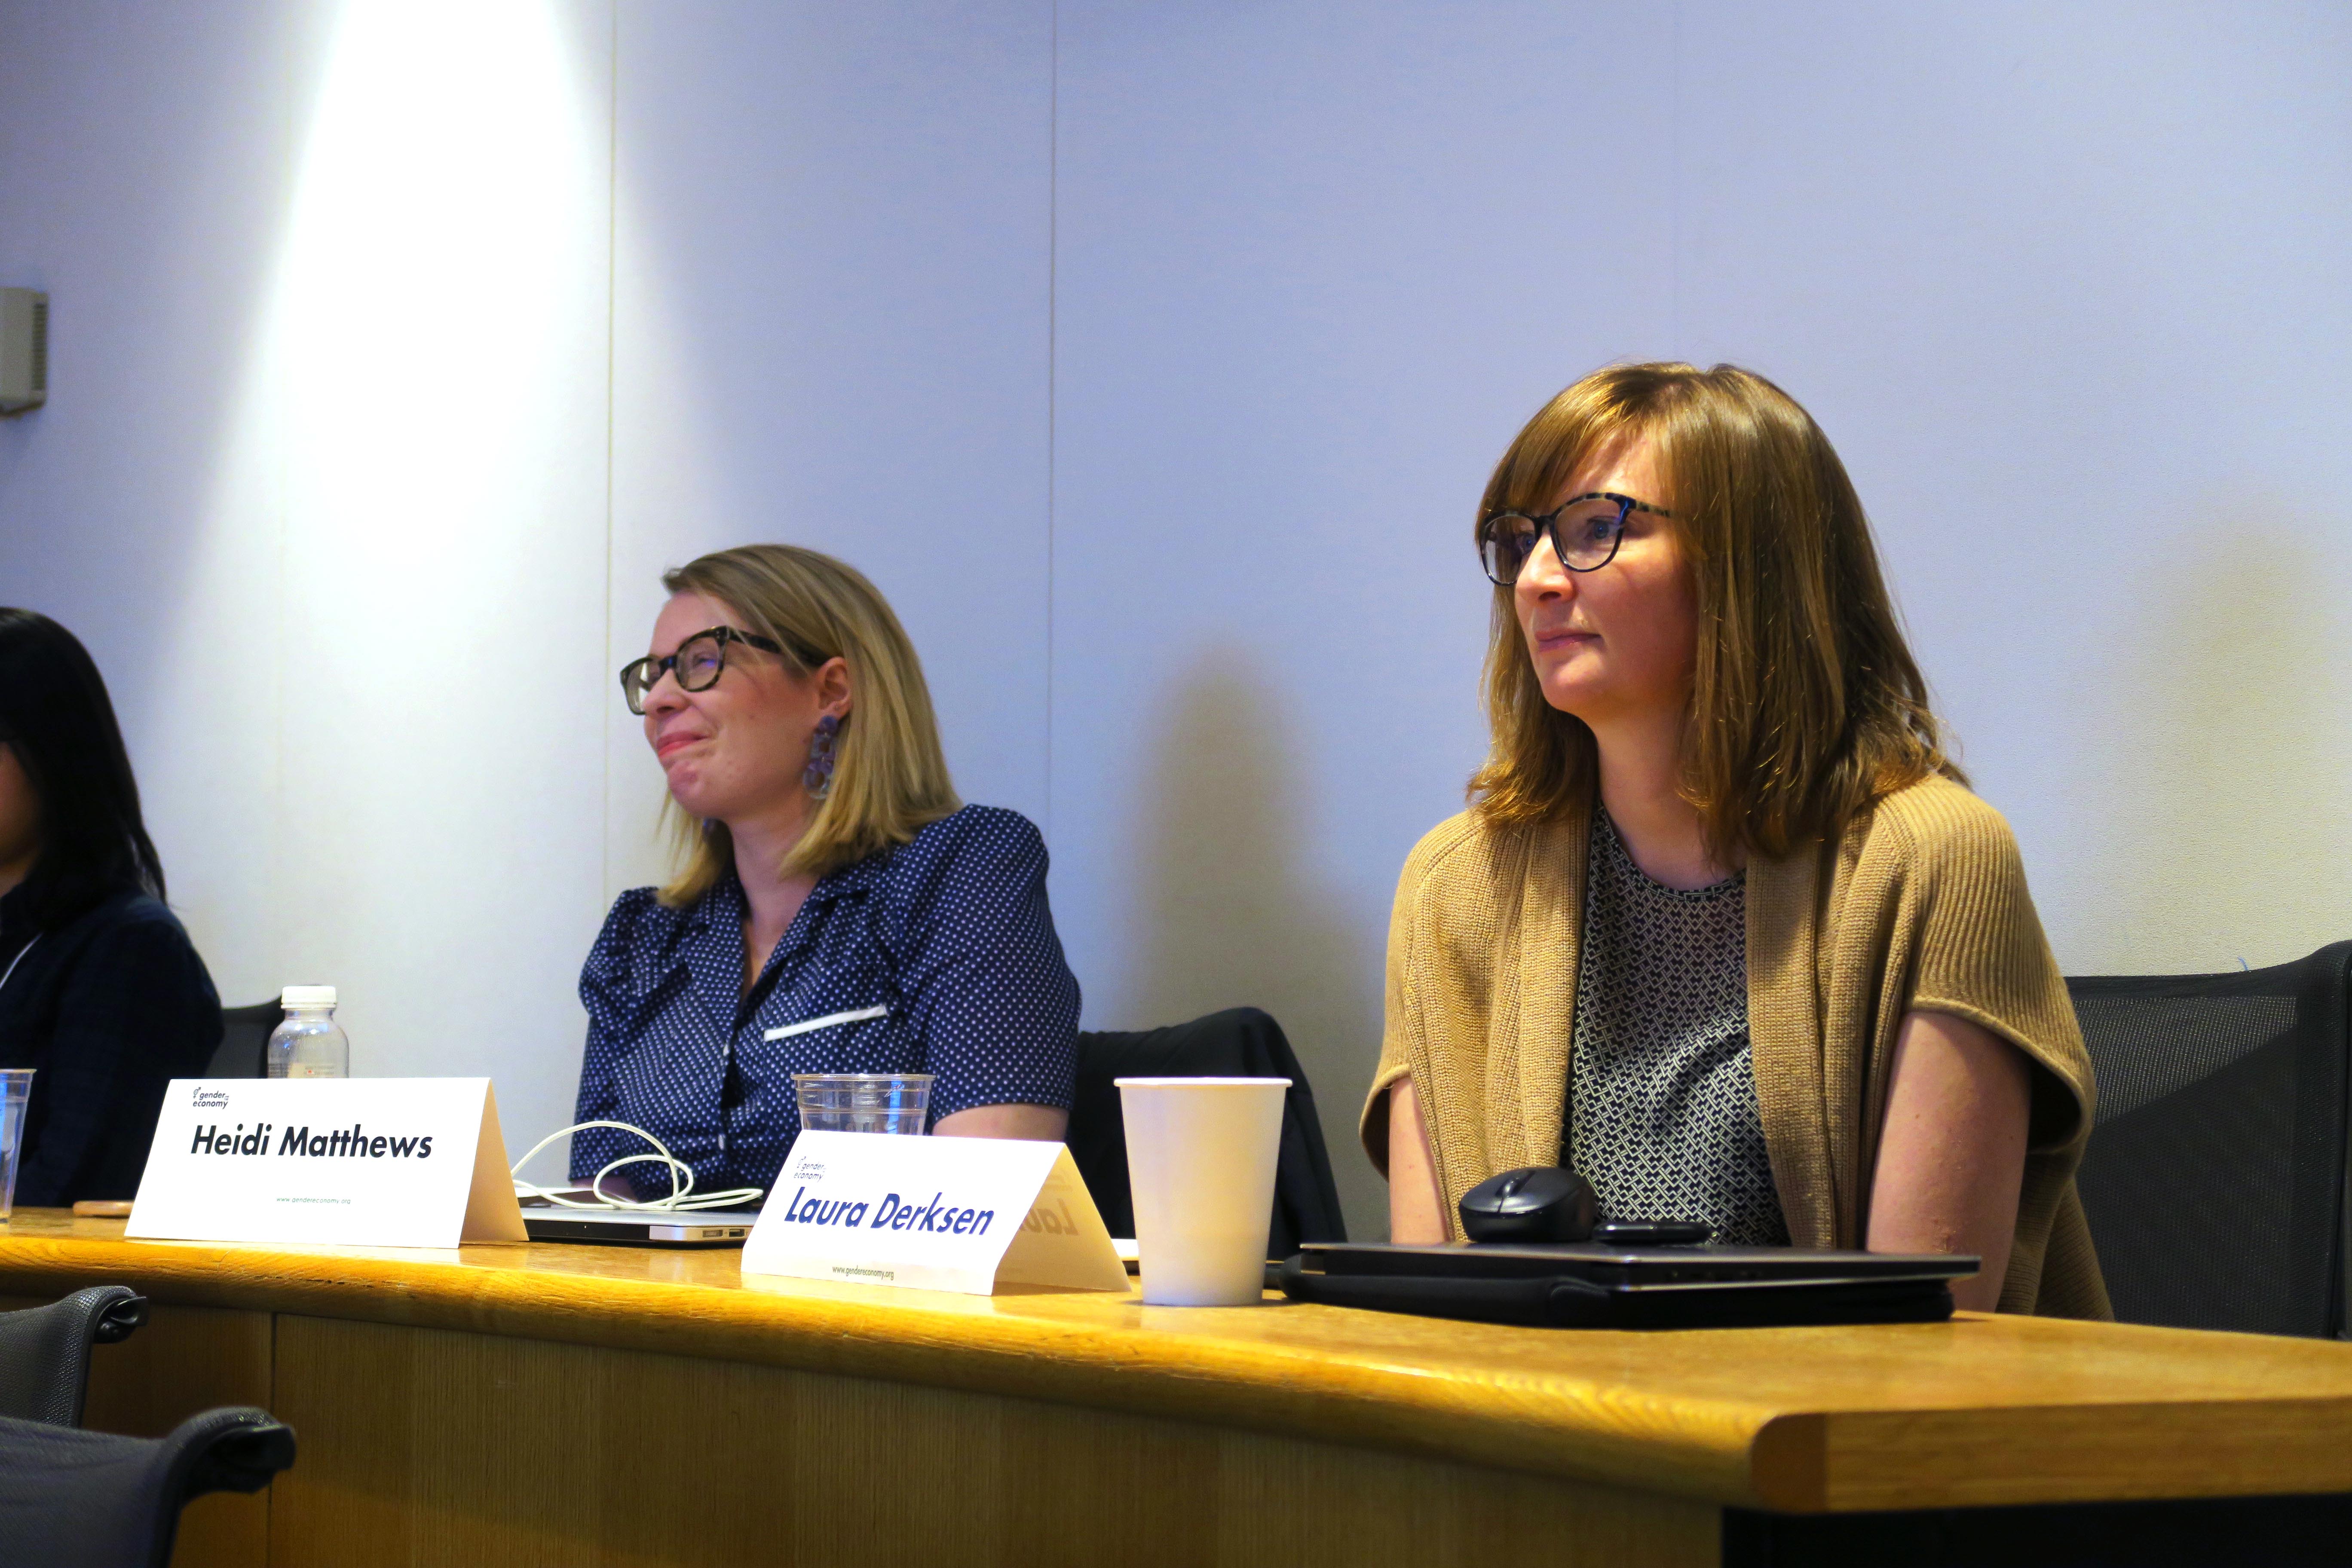 Heidi Matthews and Laura Derksen partake in GATE's Research Roundtable debate